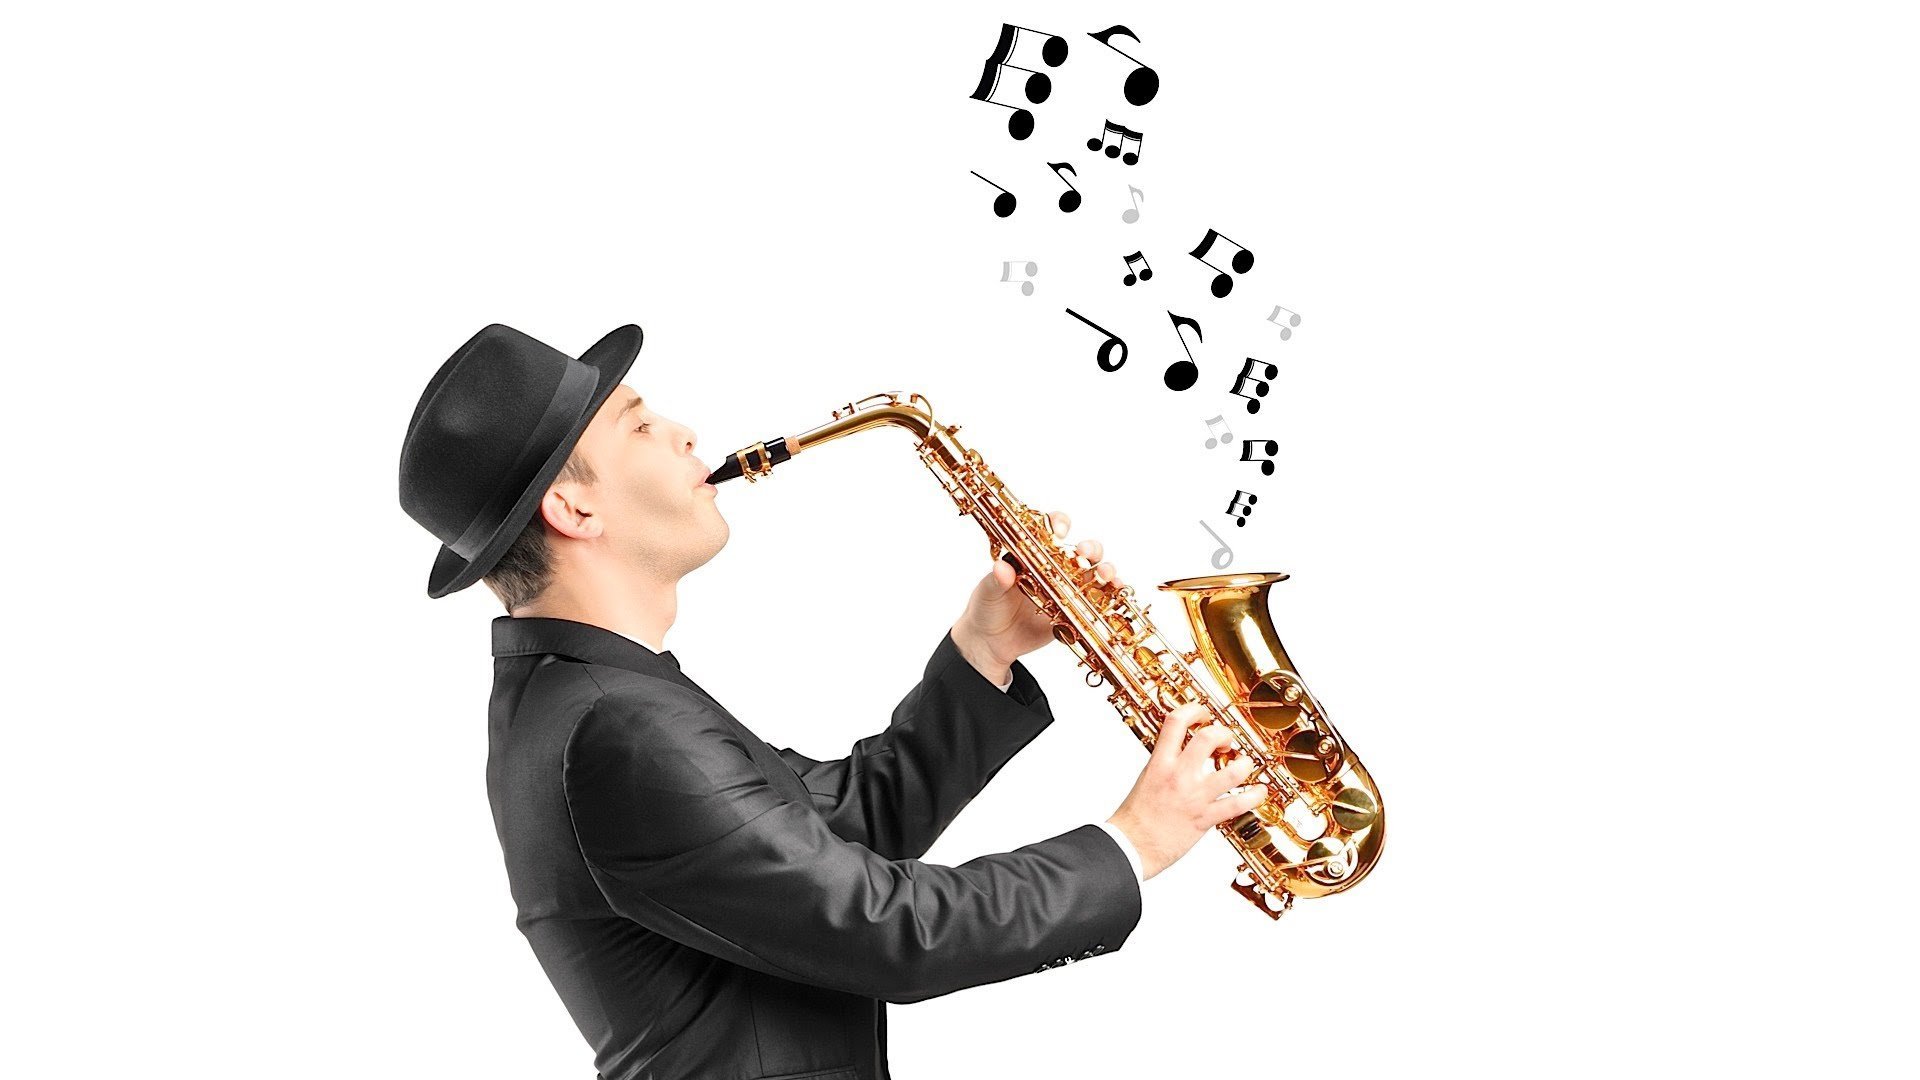 Saxophone jahaziel. Саксофон и музыкант. Мужчина играющий на саксофоне. Музыкант на белом фоне. Саксофонист на белом фоне.